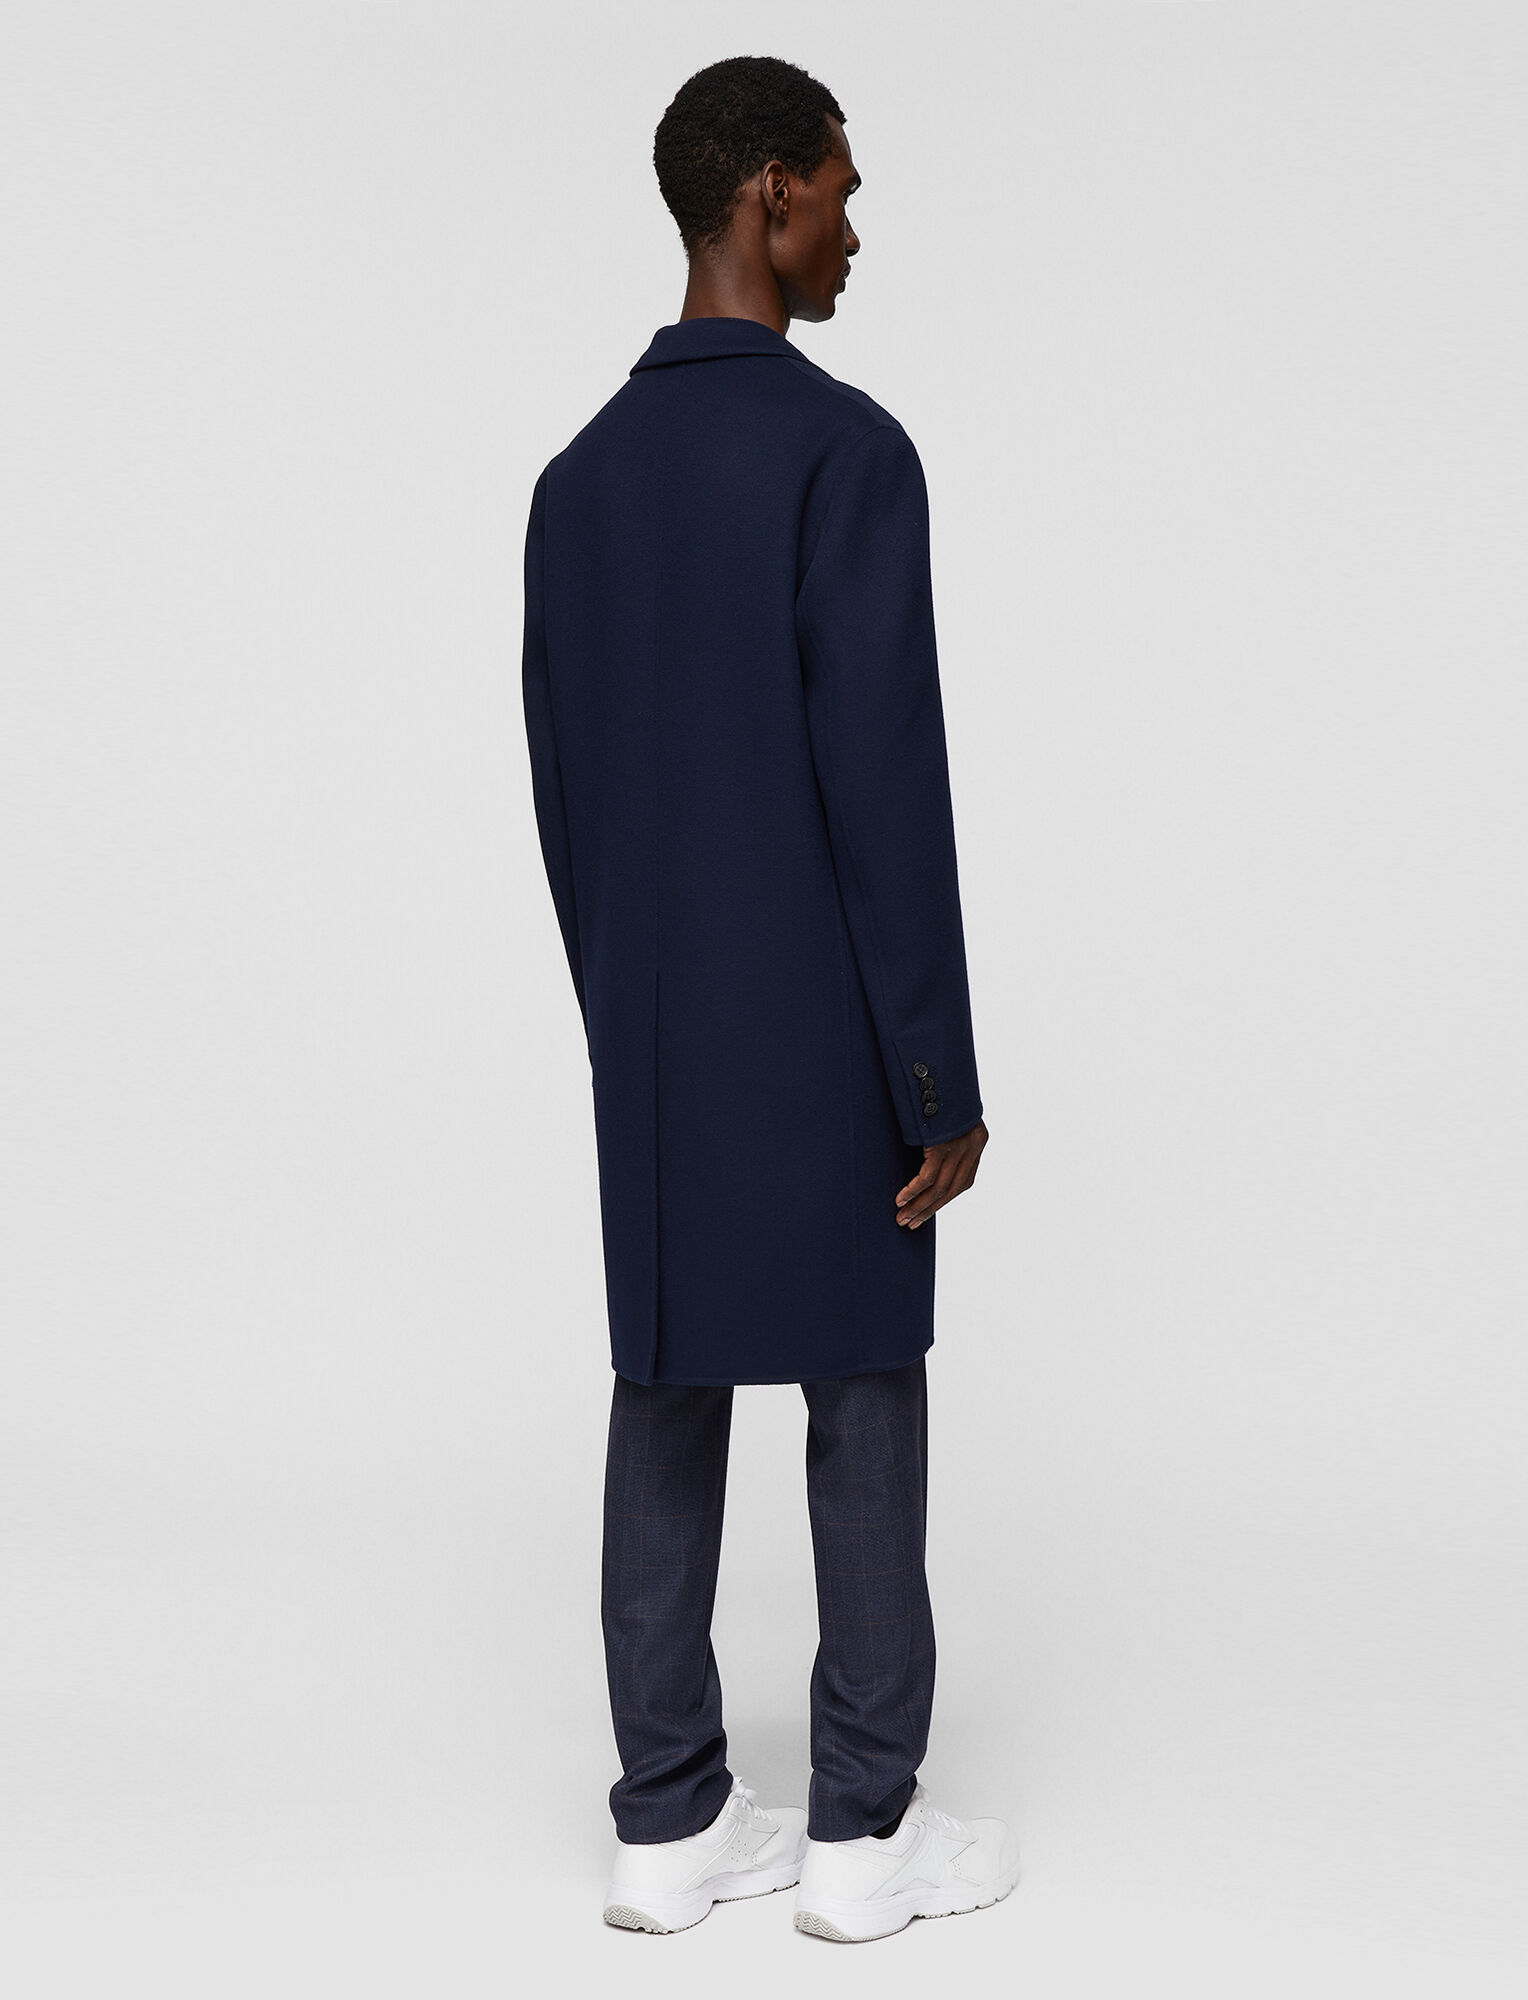 Joseph, Armand Luxe Double Wool Coat, in NAVY